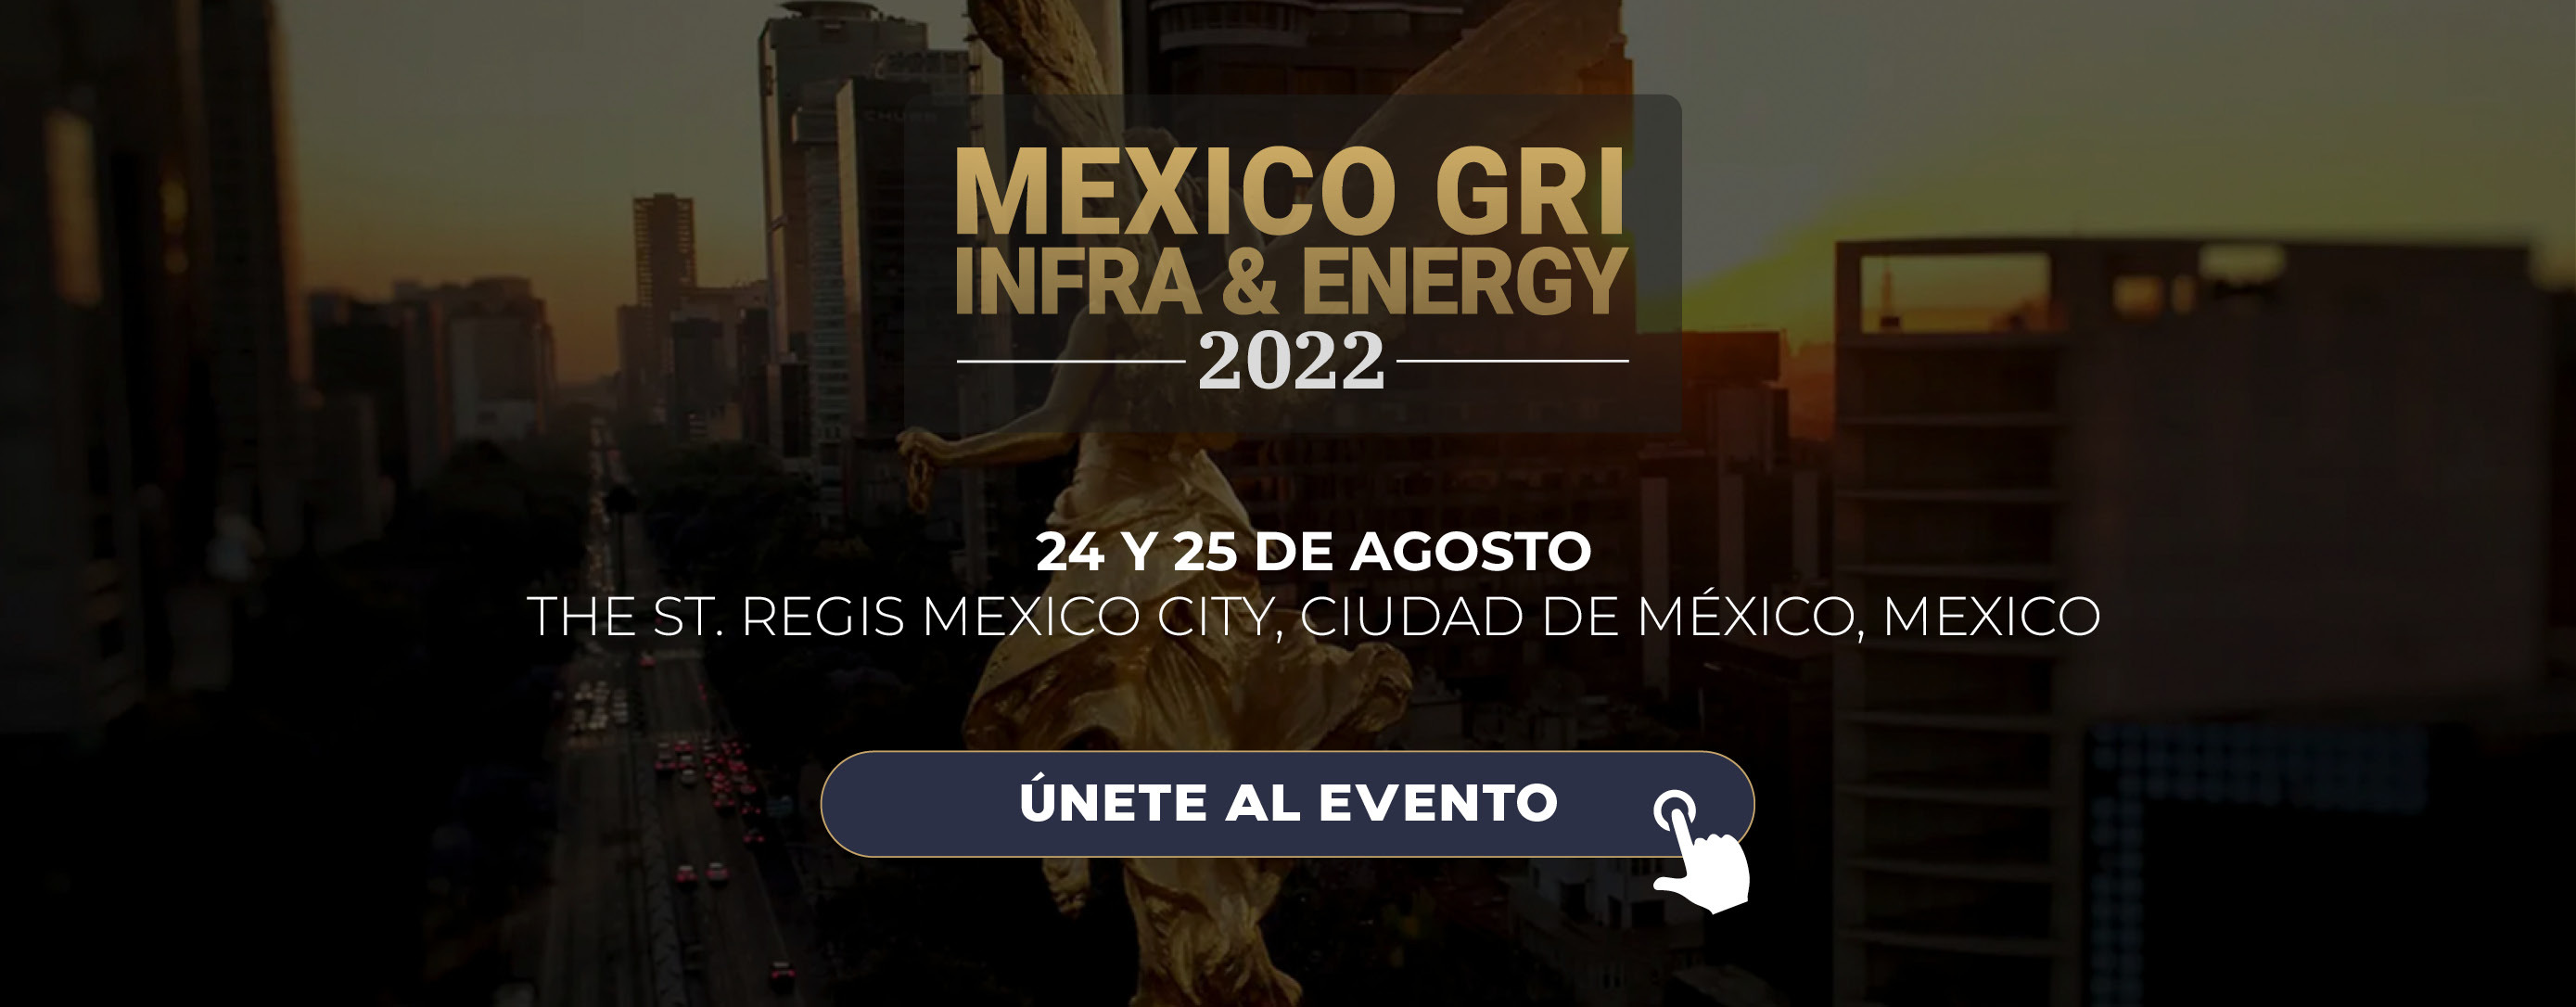 Mexico GRI Infra & Energy 2022